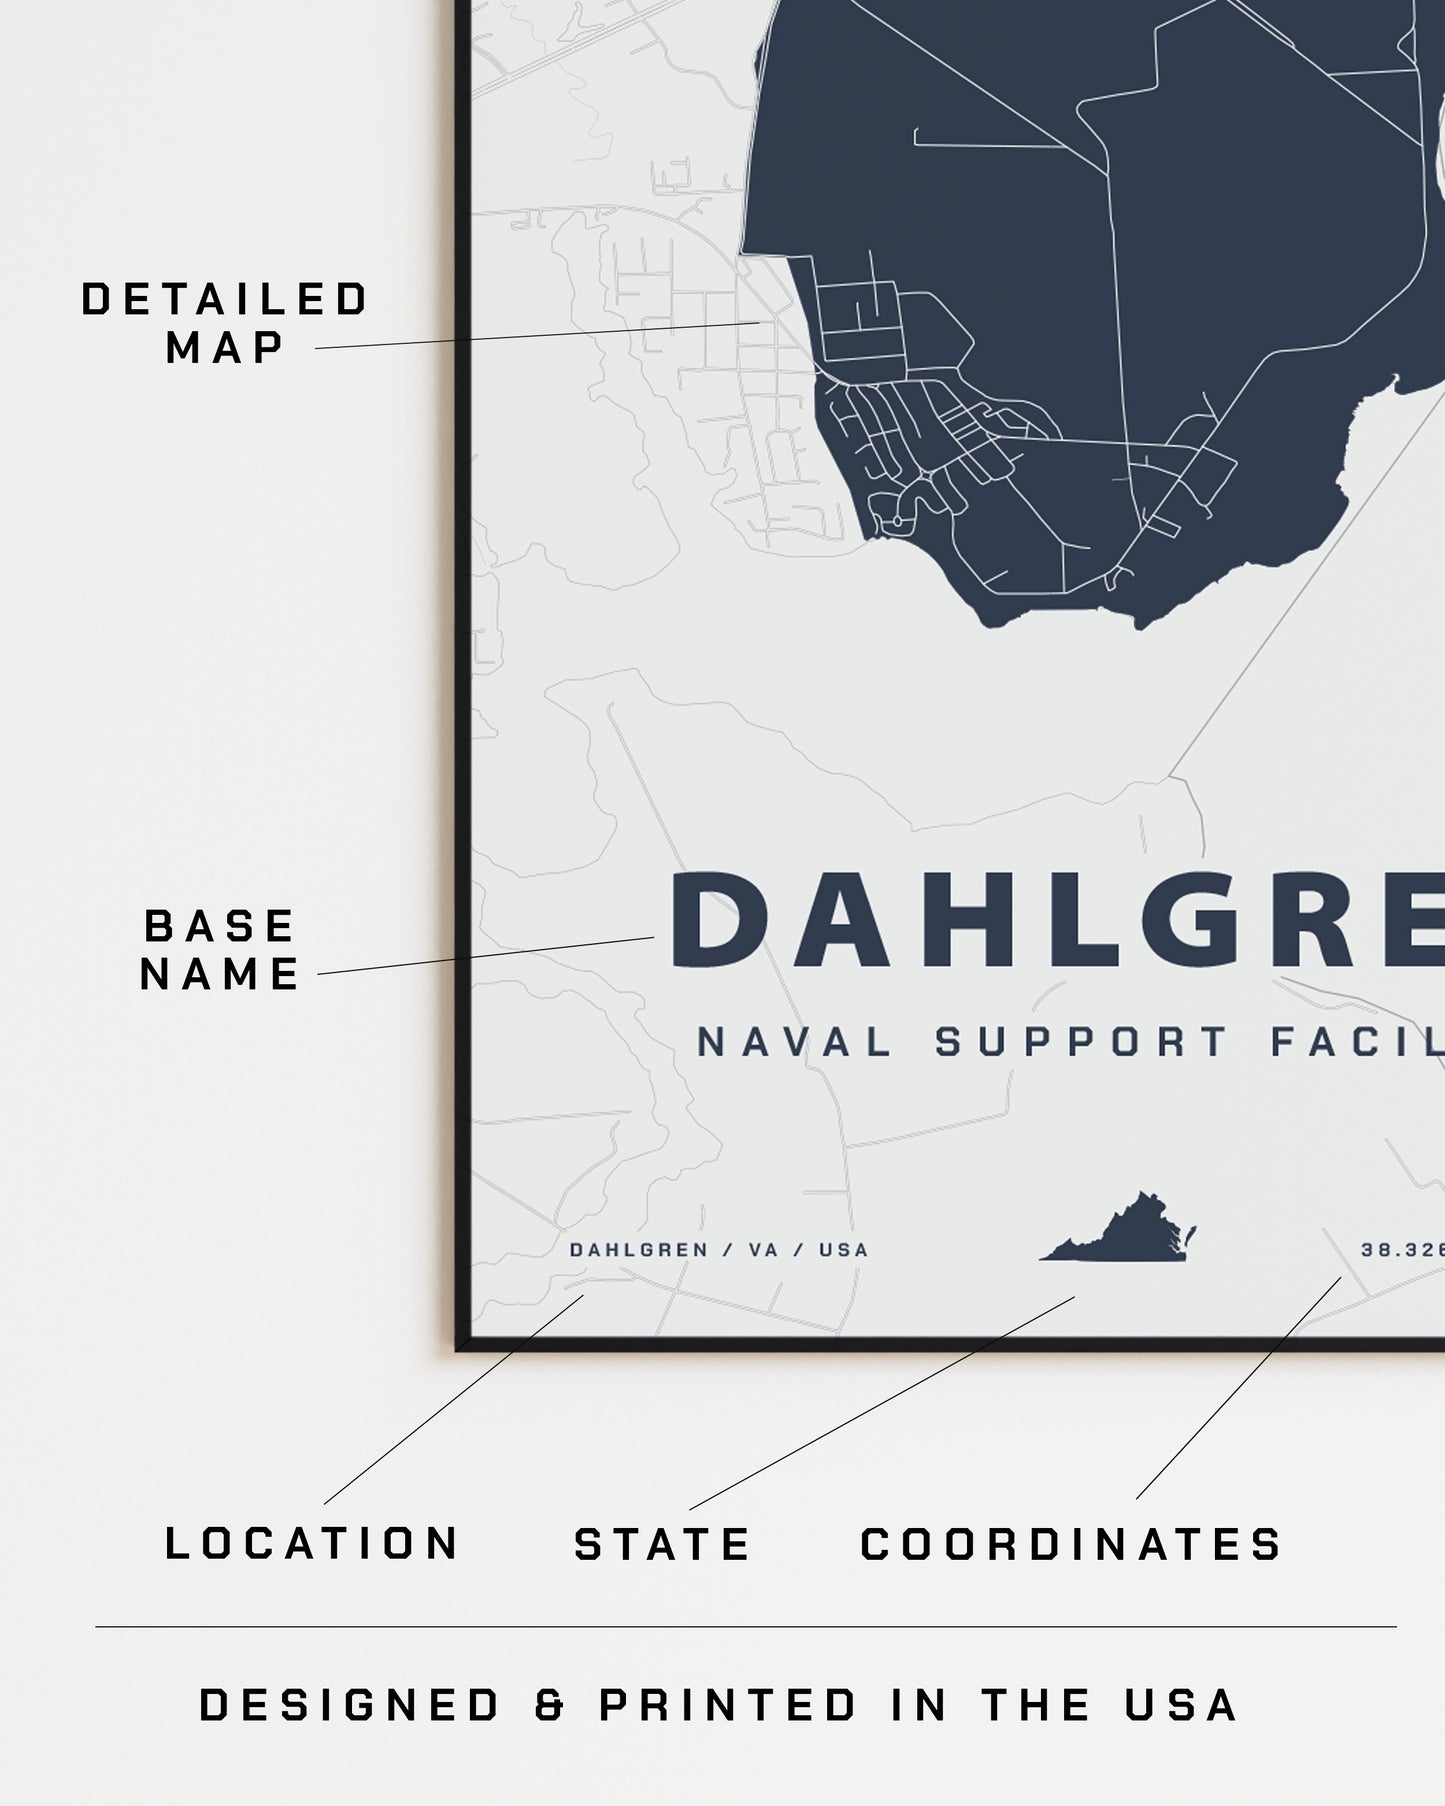 Dahlgren Naval Support Facility Map Print